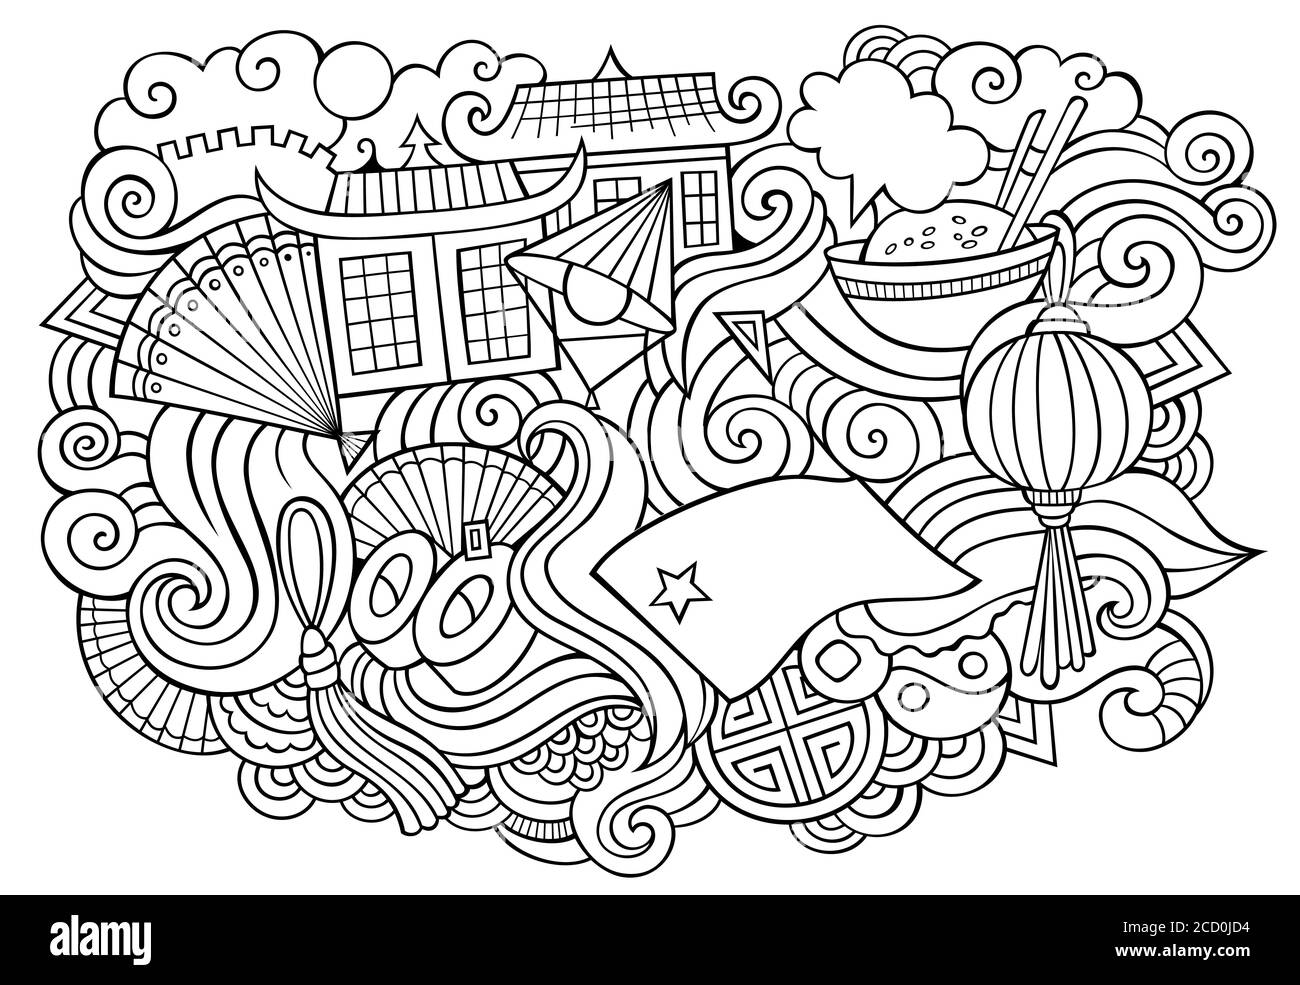 China hand drawn cartoon doodles illustration. Funny travel design. Stock Vector